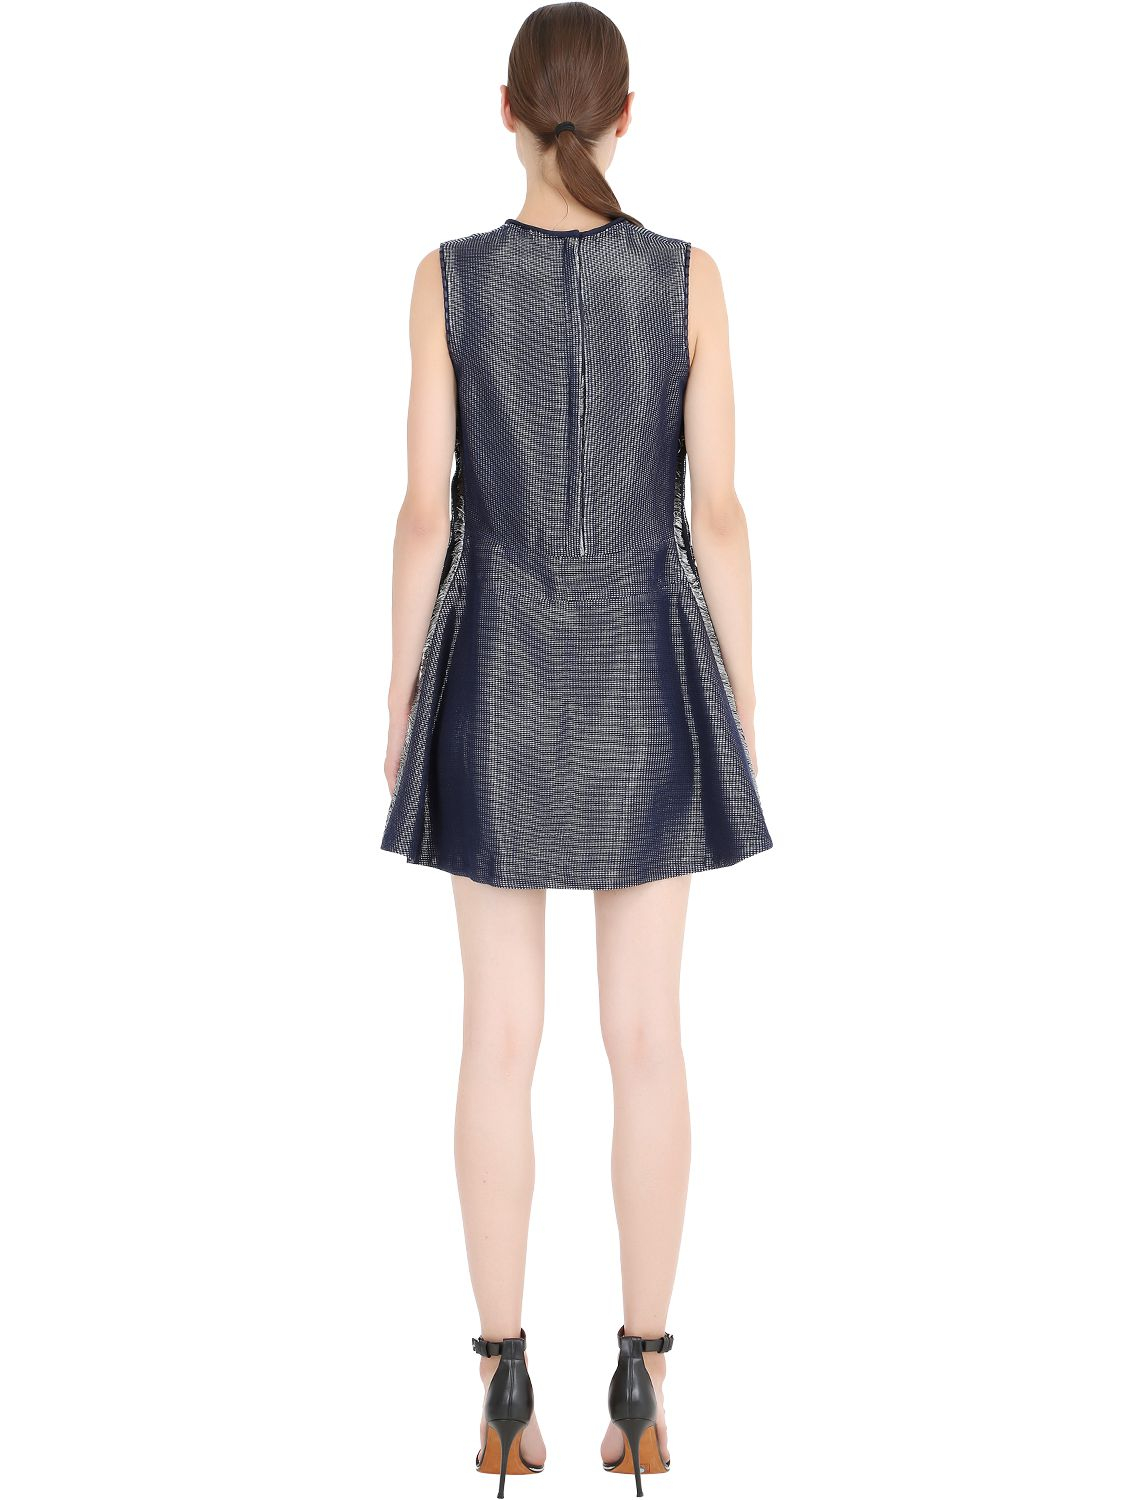 Lyst - Calvin Klein Ribbed Lamé Dress in Metallic